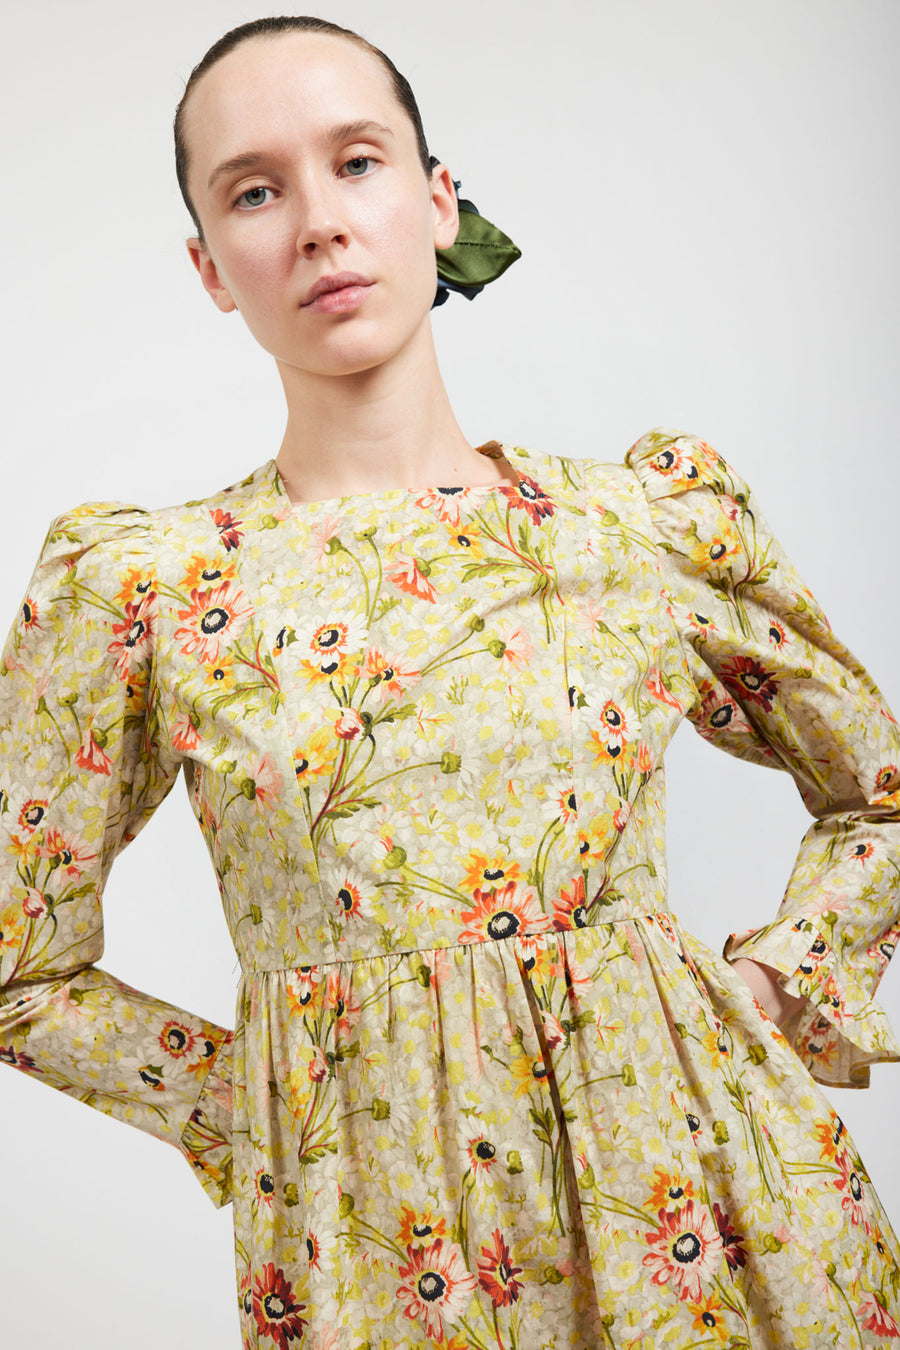 BATSHEVA - Laura Ashley x BATSHEVA Square Neck Mini Prairie Dress in Witton Floral